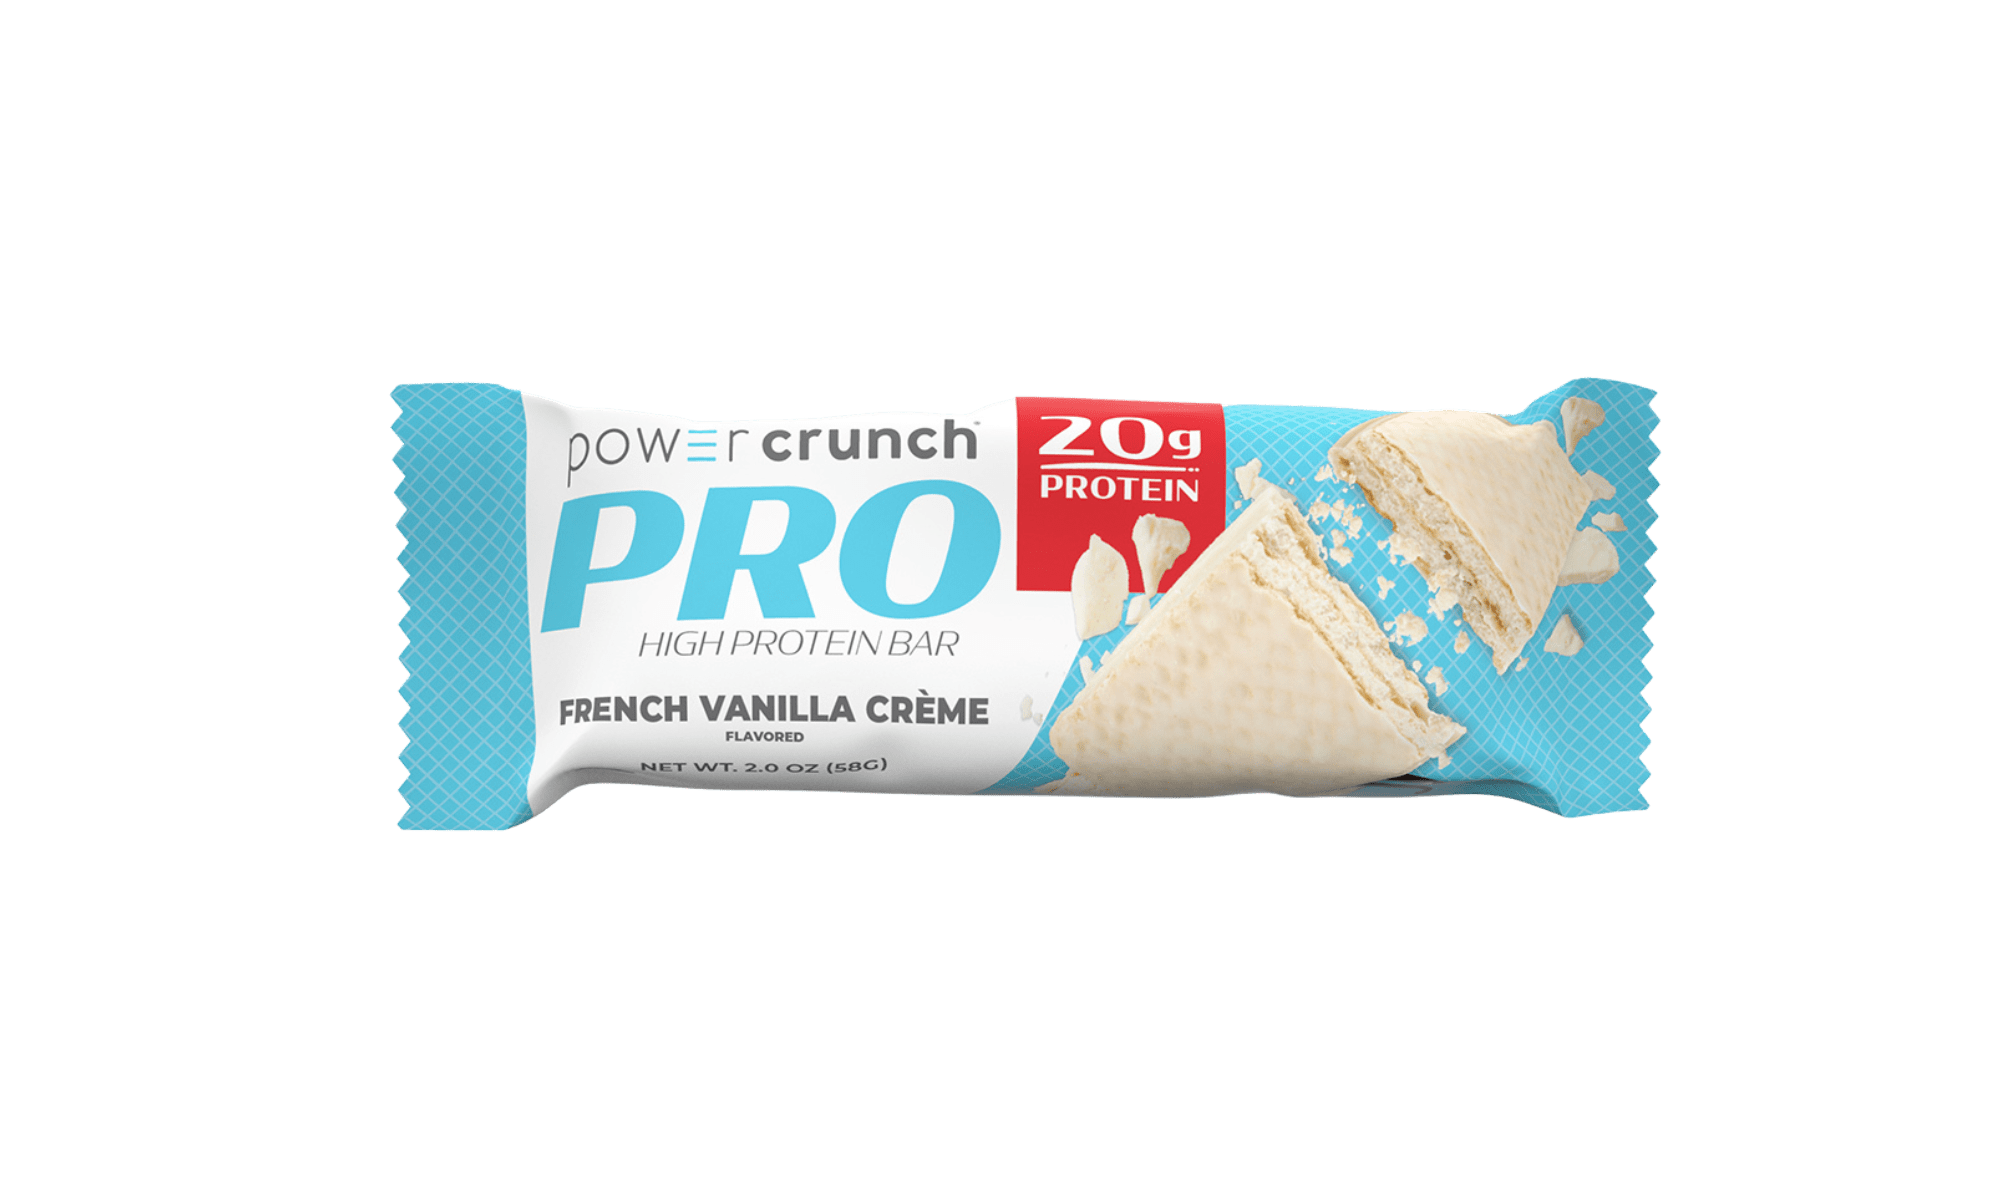 Power Crunch French Vanilla PRO 20g protein bars